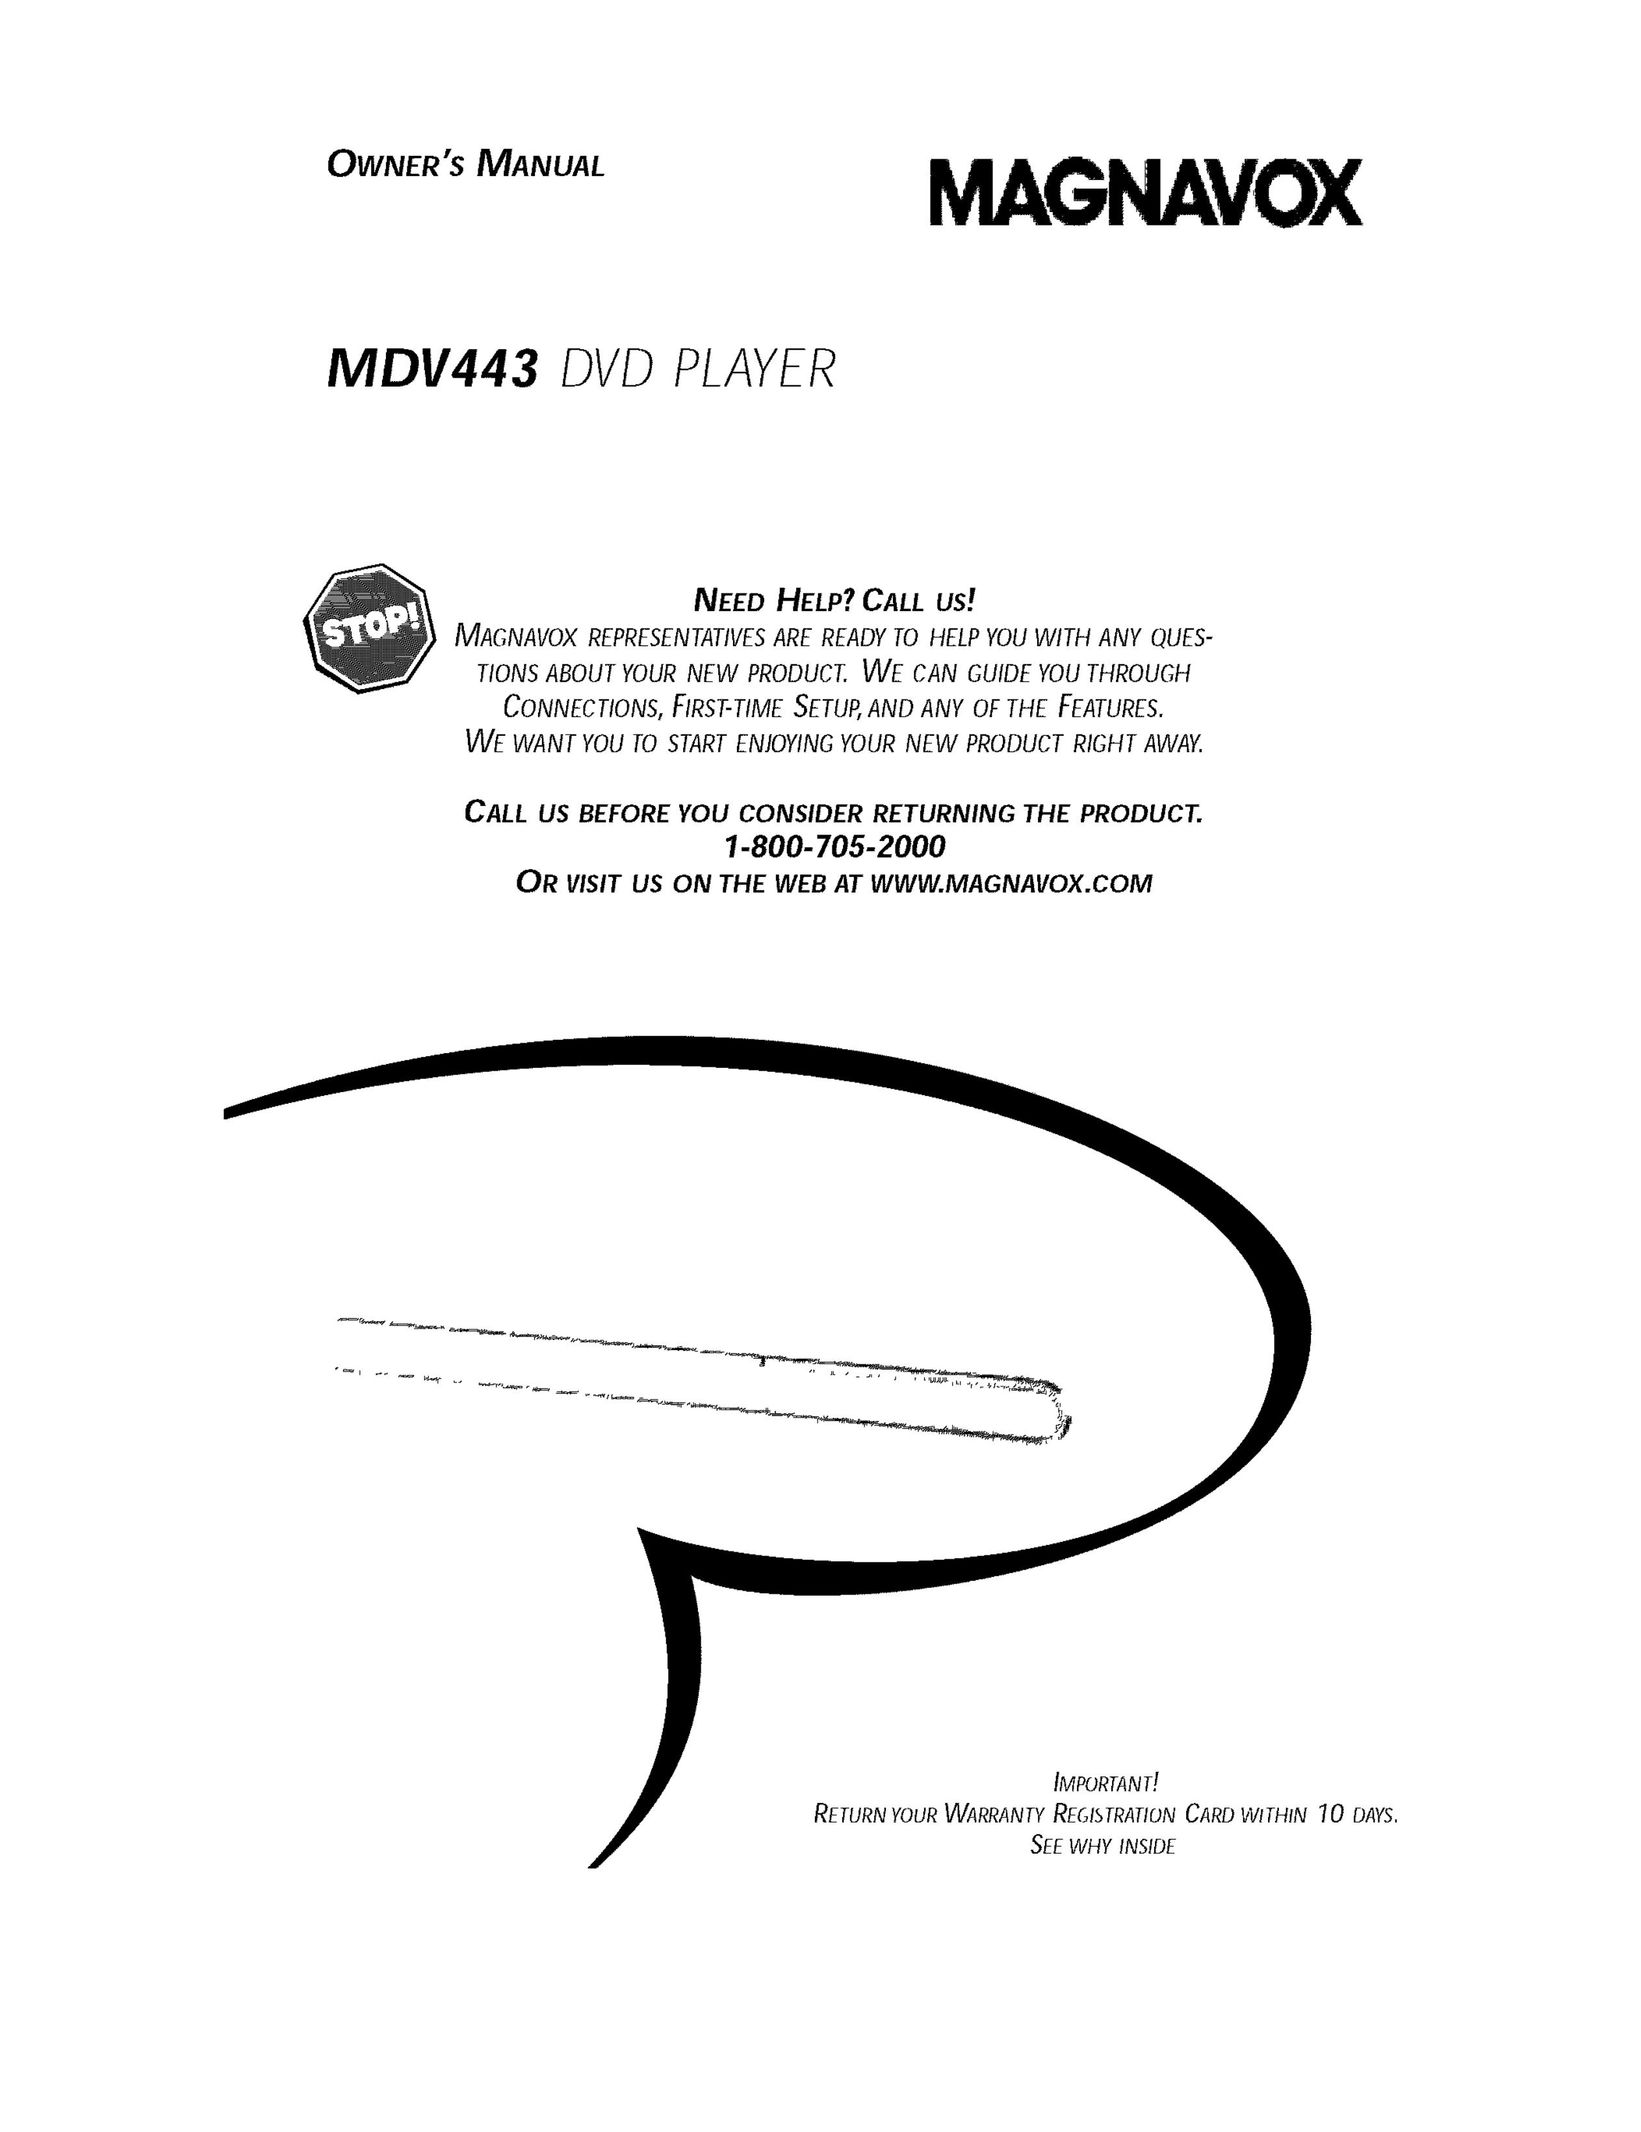 Magnavox MDV443 DVD Player User Manual